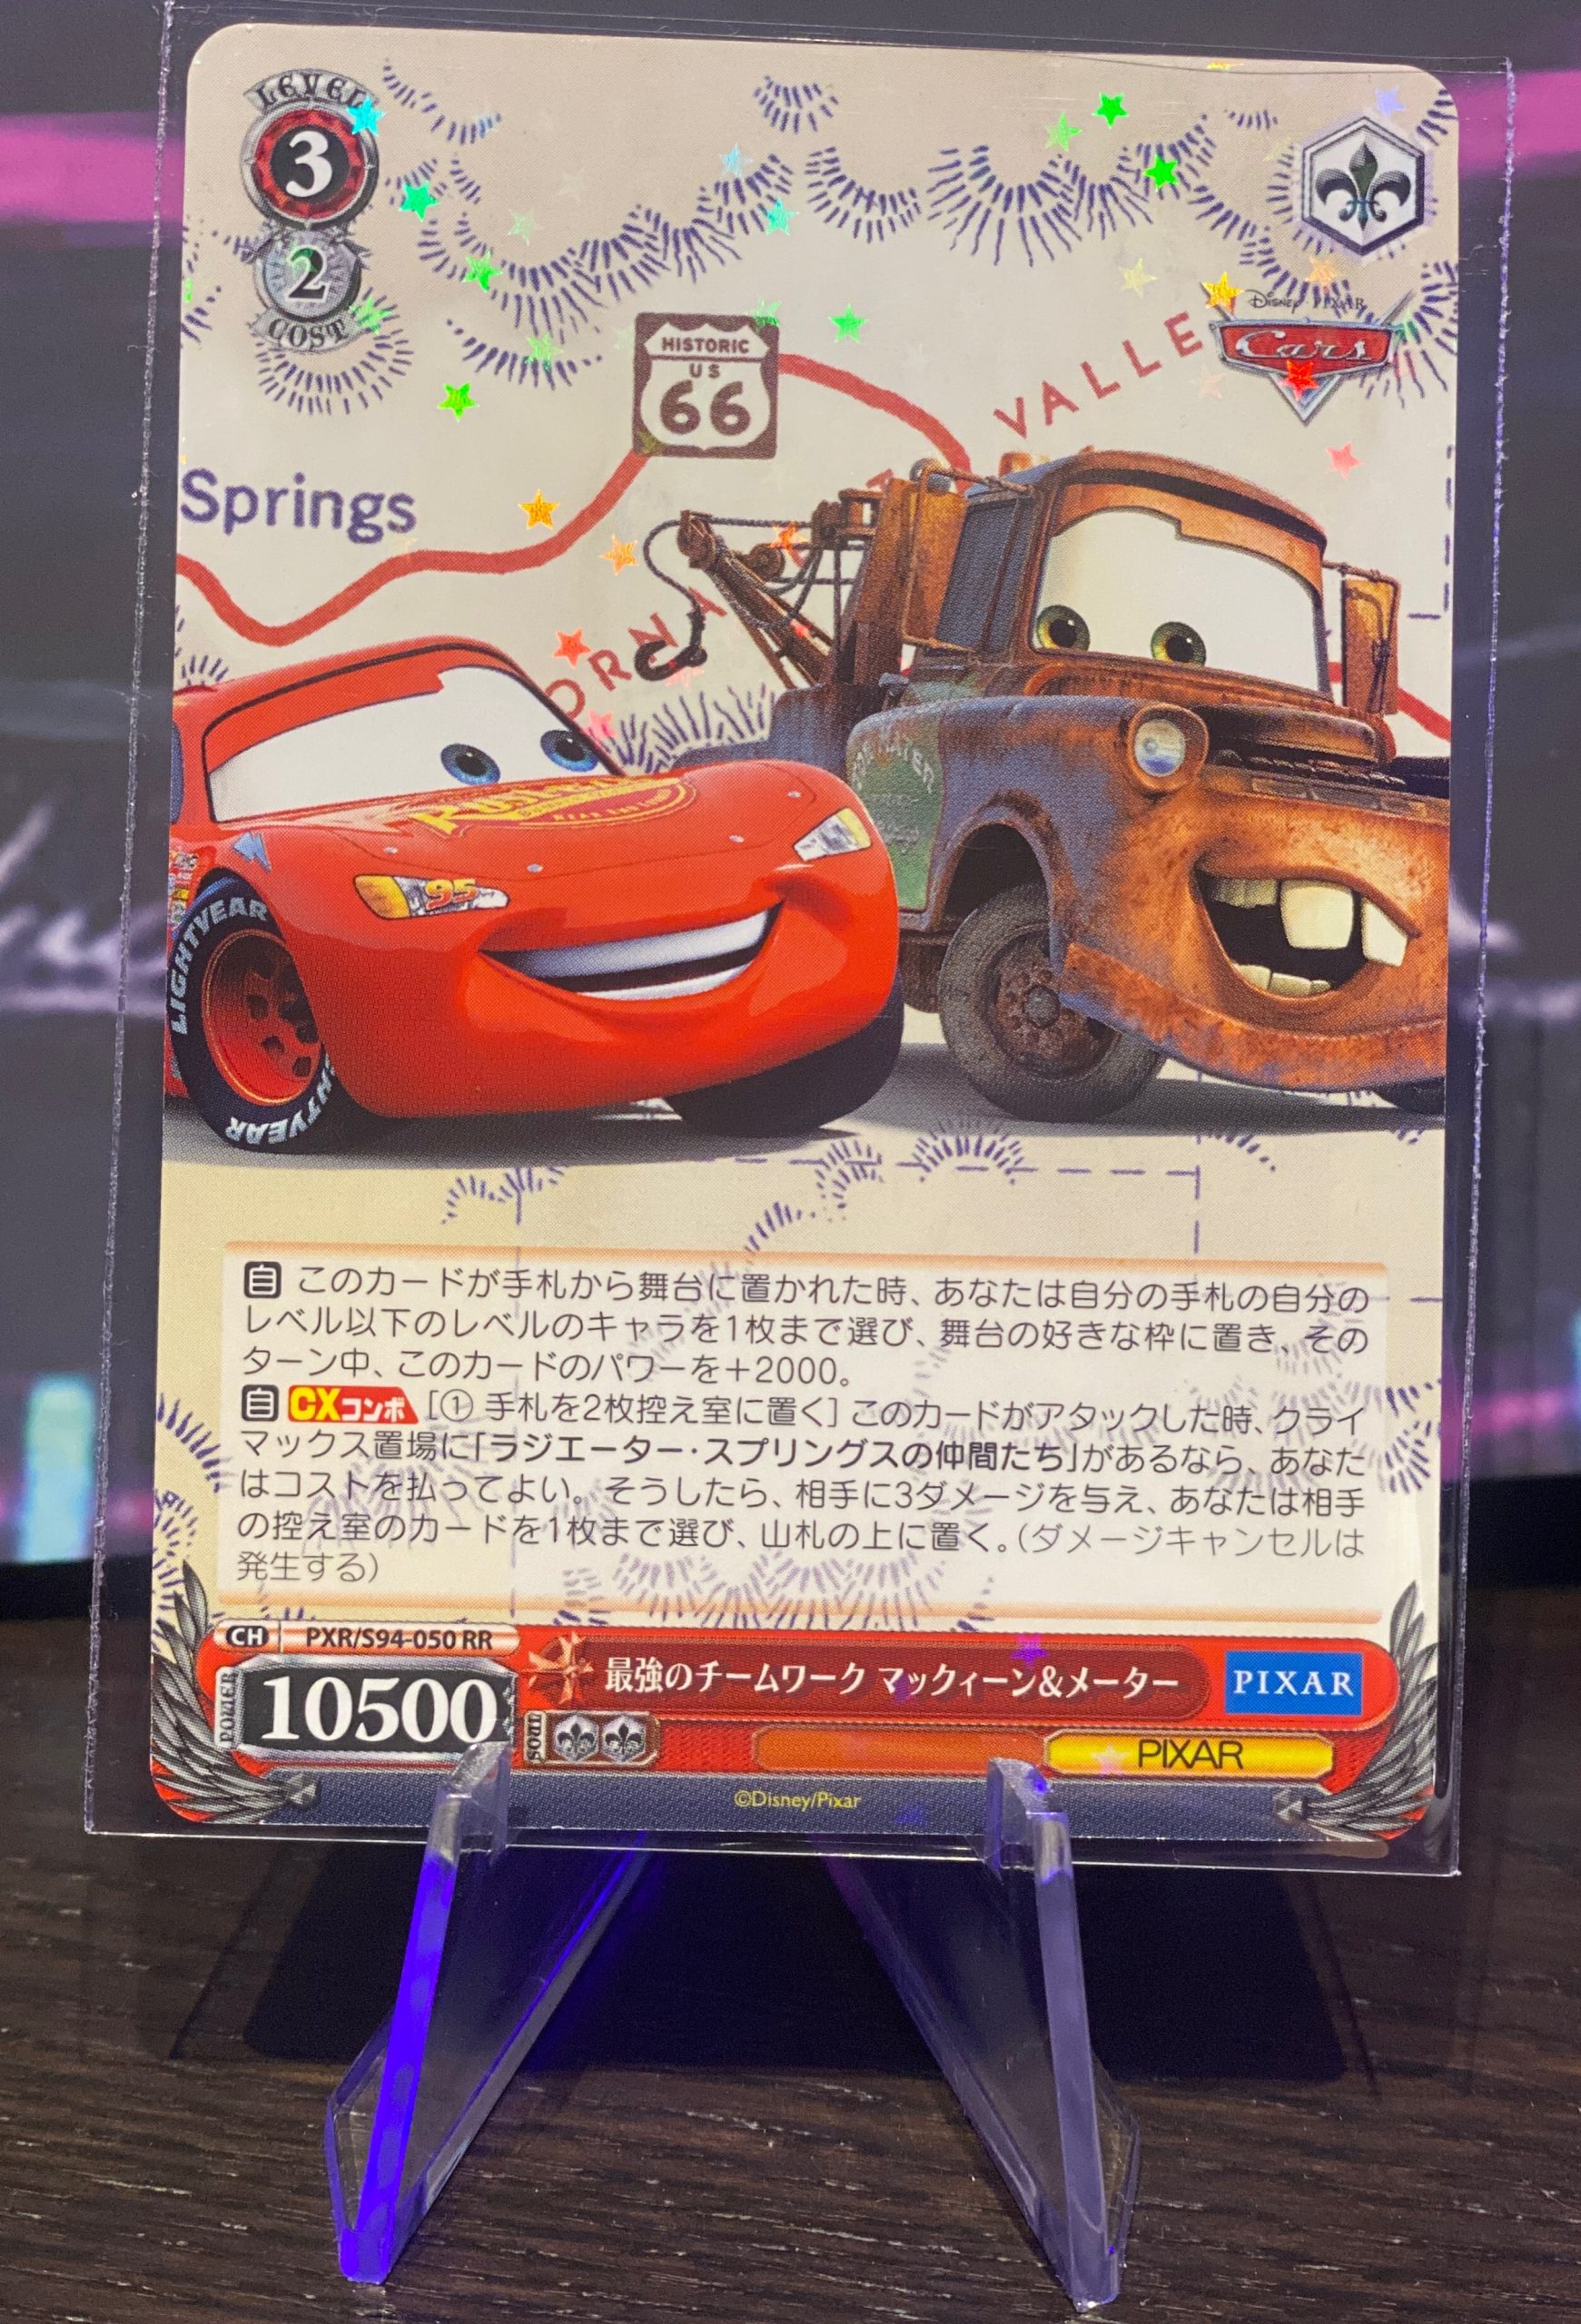 Disney Pixar Cards - Cars PXR/S94-050 RR Double Rare Foil